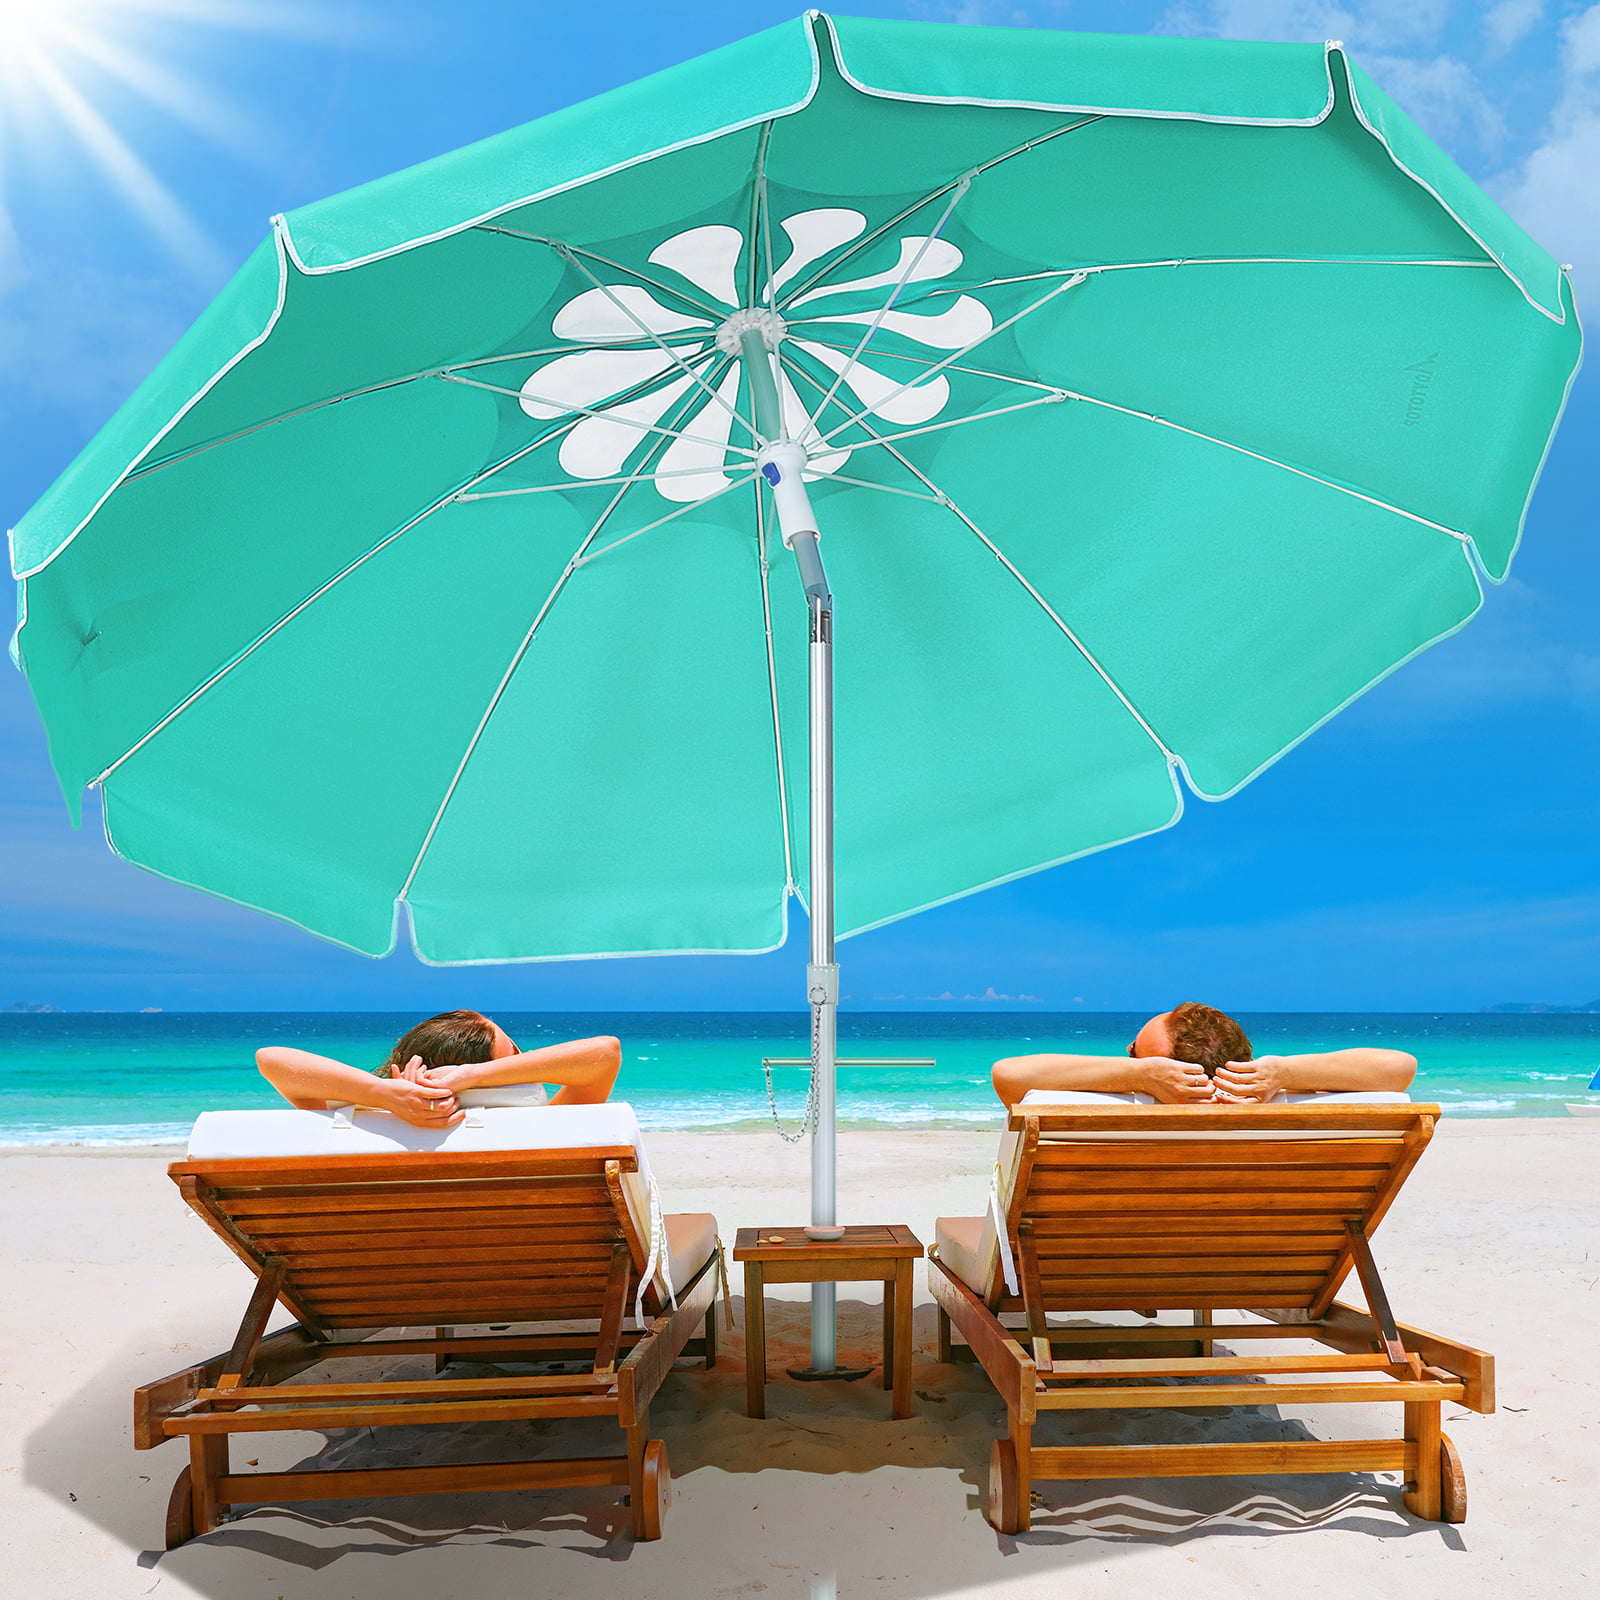 BLUE Solar Reflective UPF 50 Clamp on Fiberglass Beach Vented Umbrella 